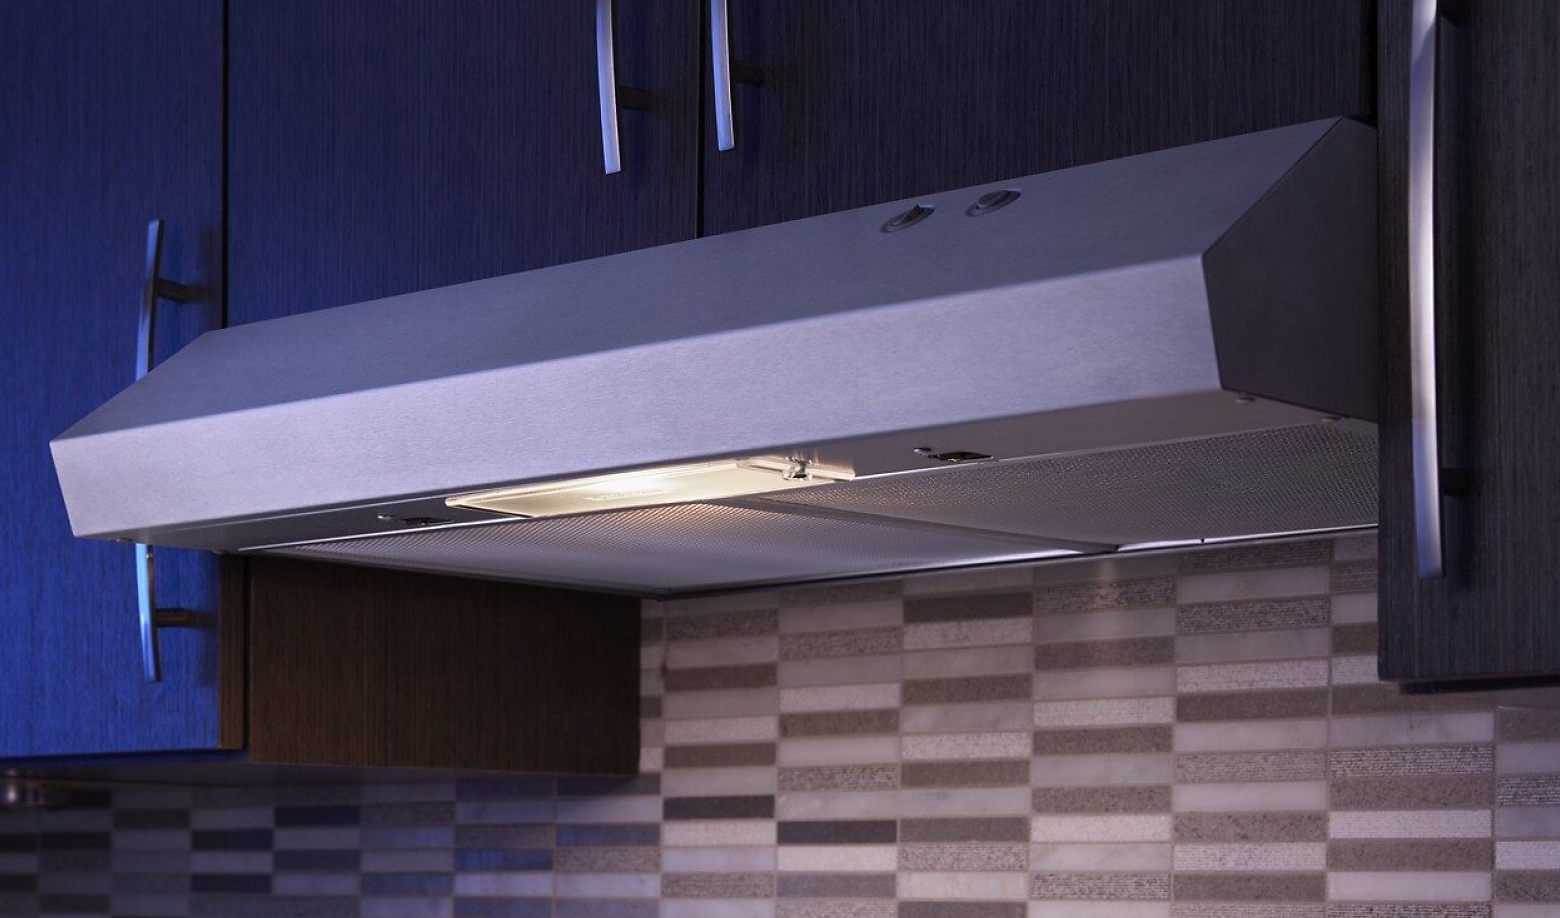 Range hood between dark cabinets with light on